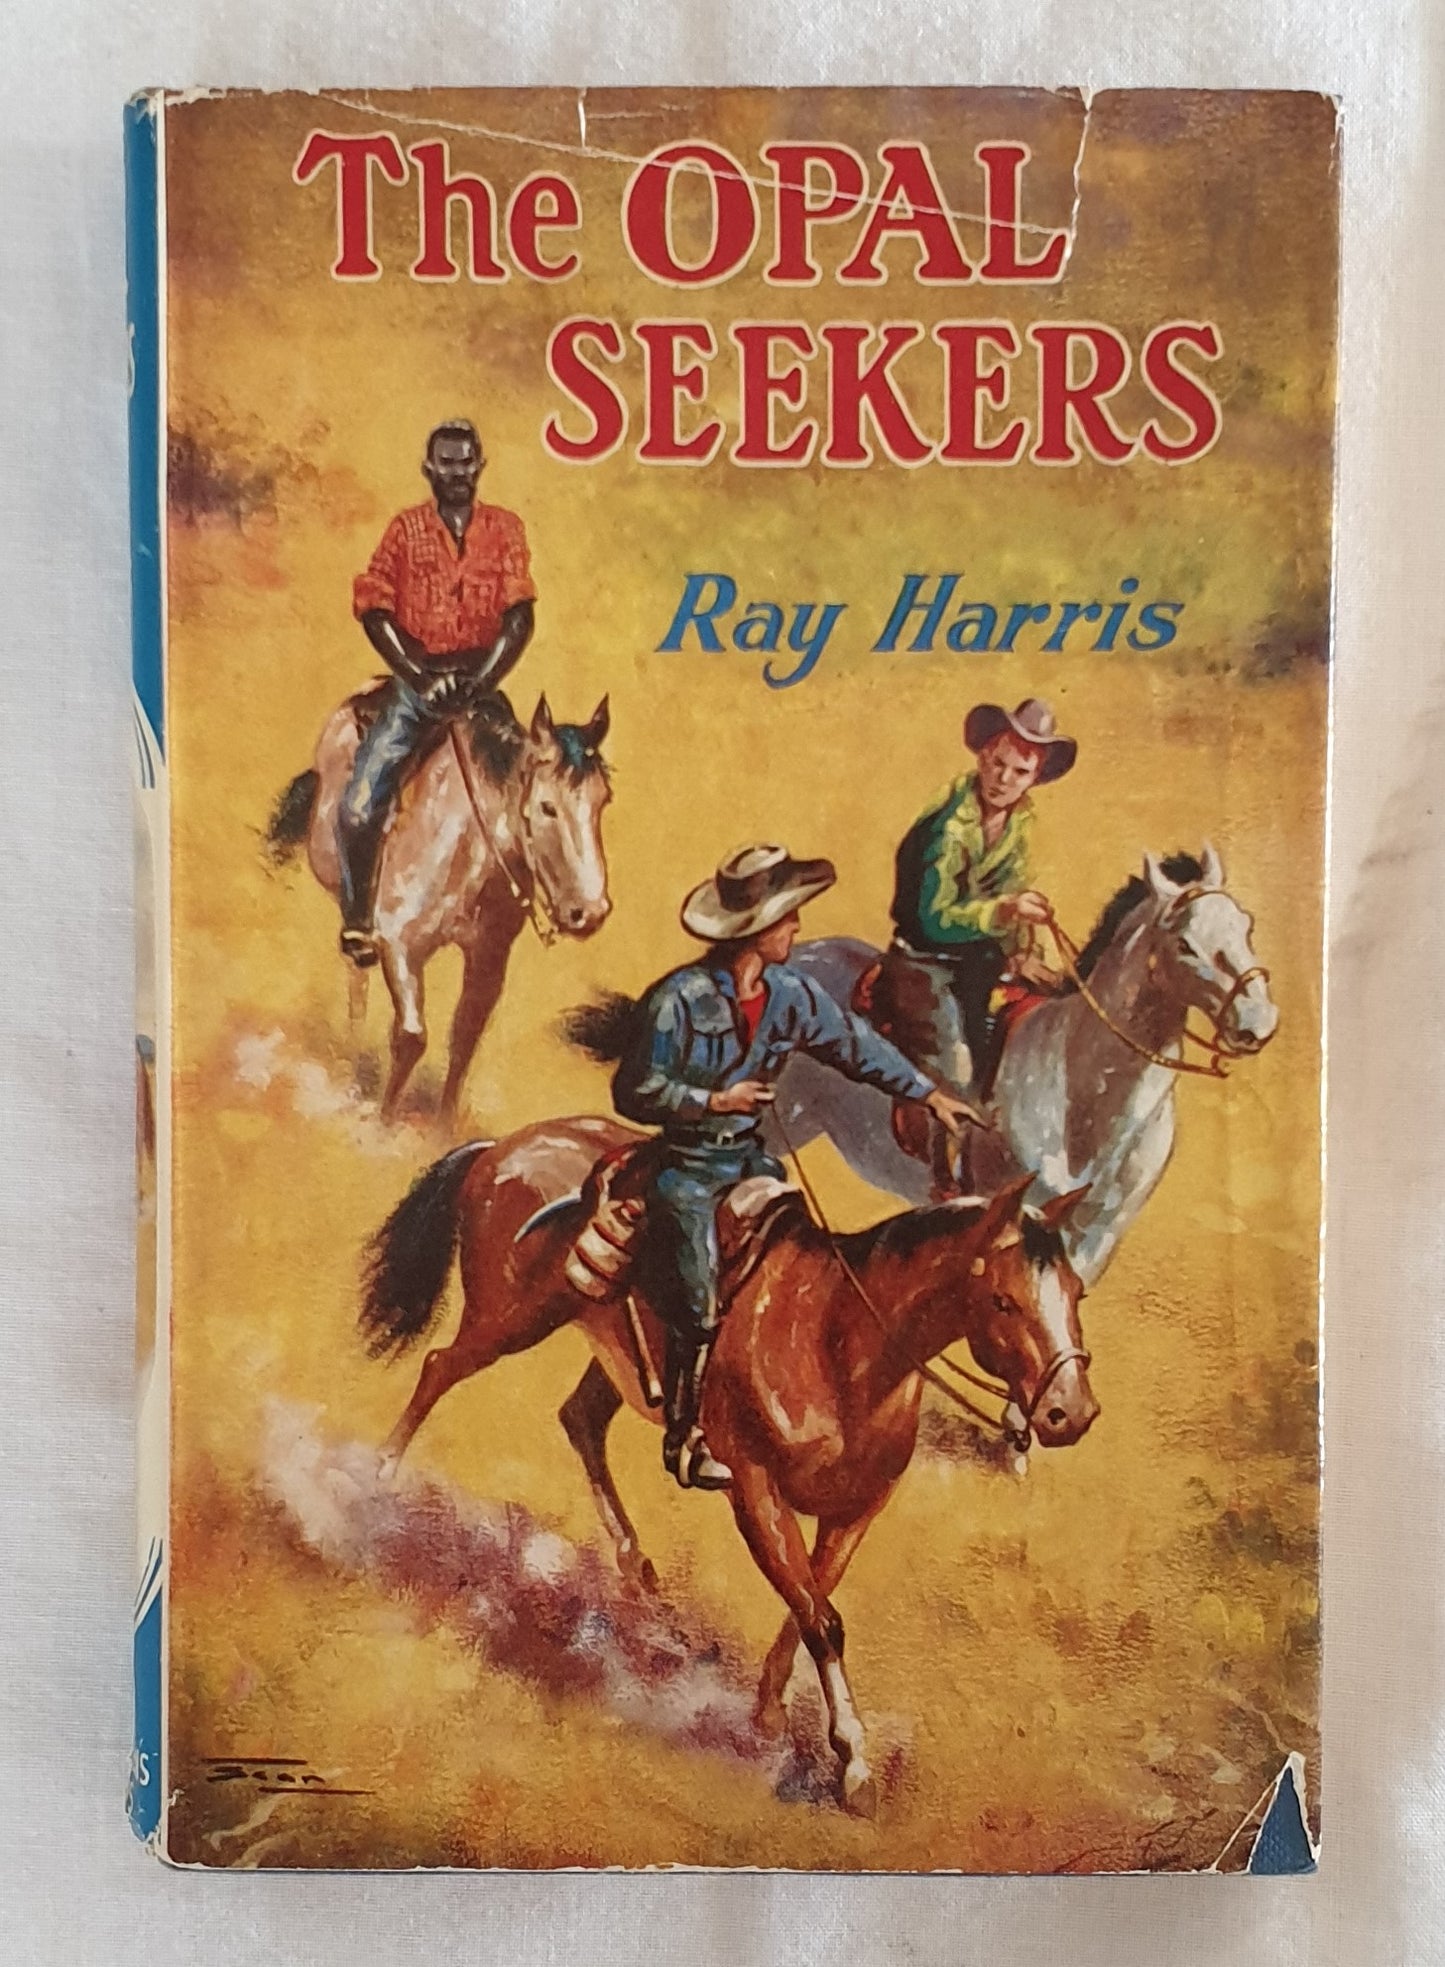 The Opal Seekers by Ray Harris